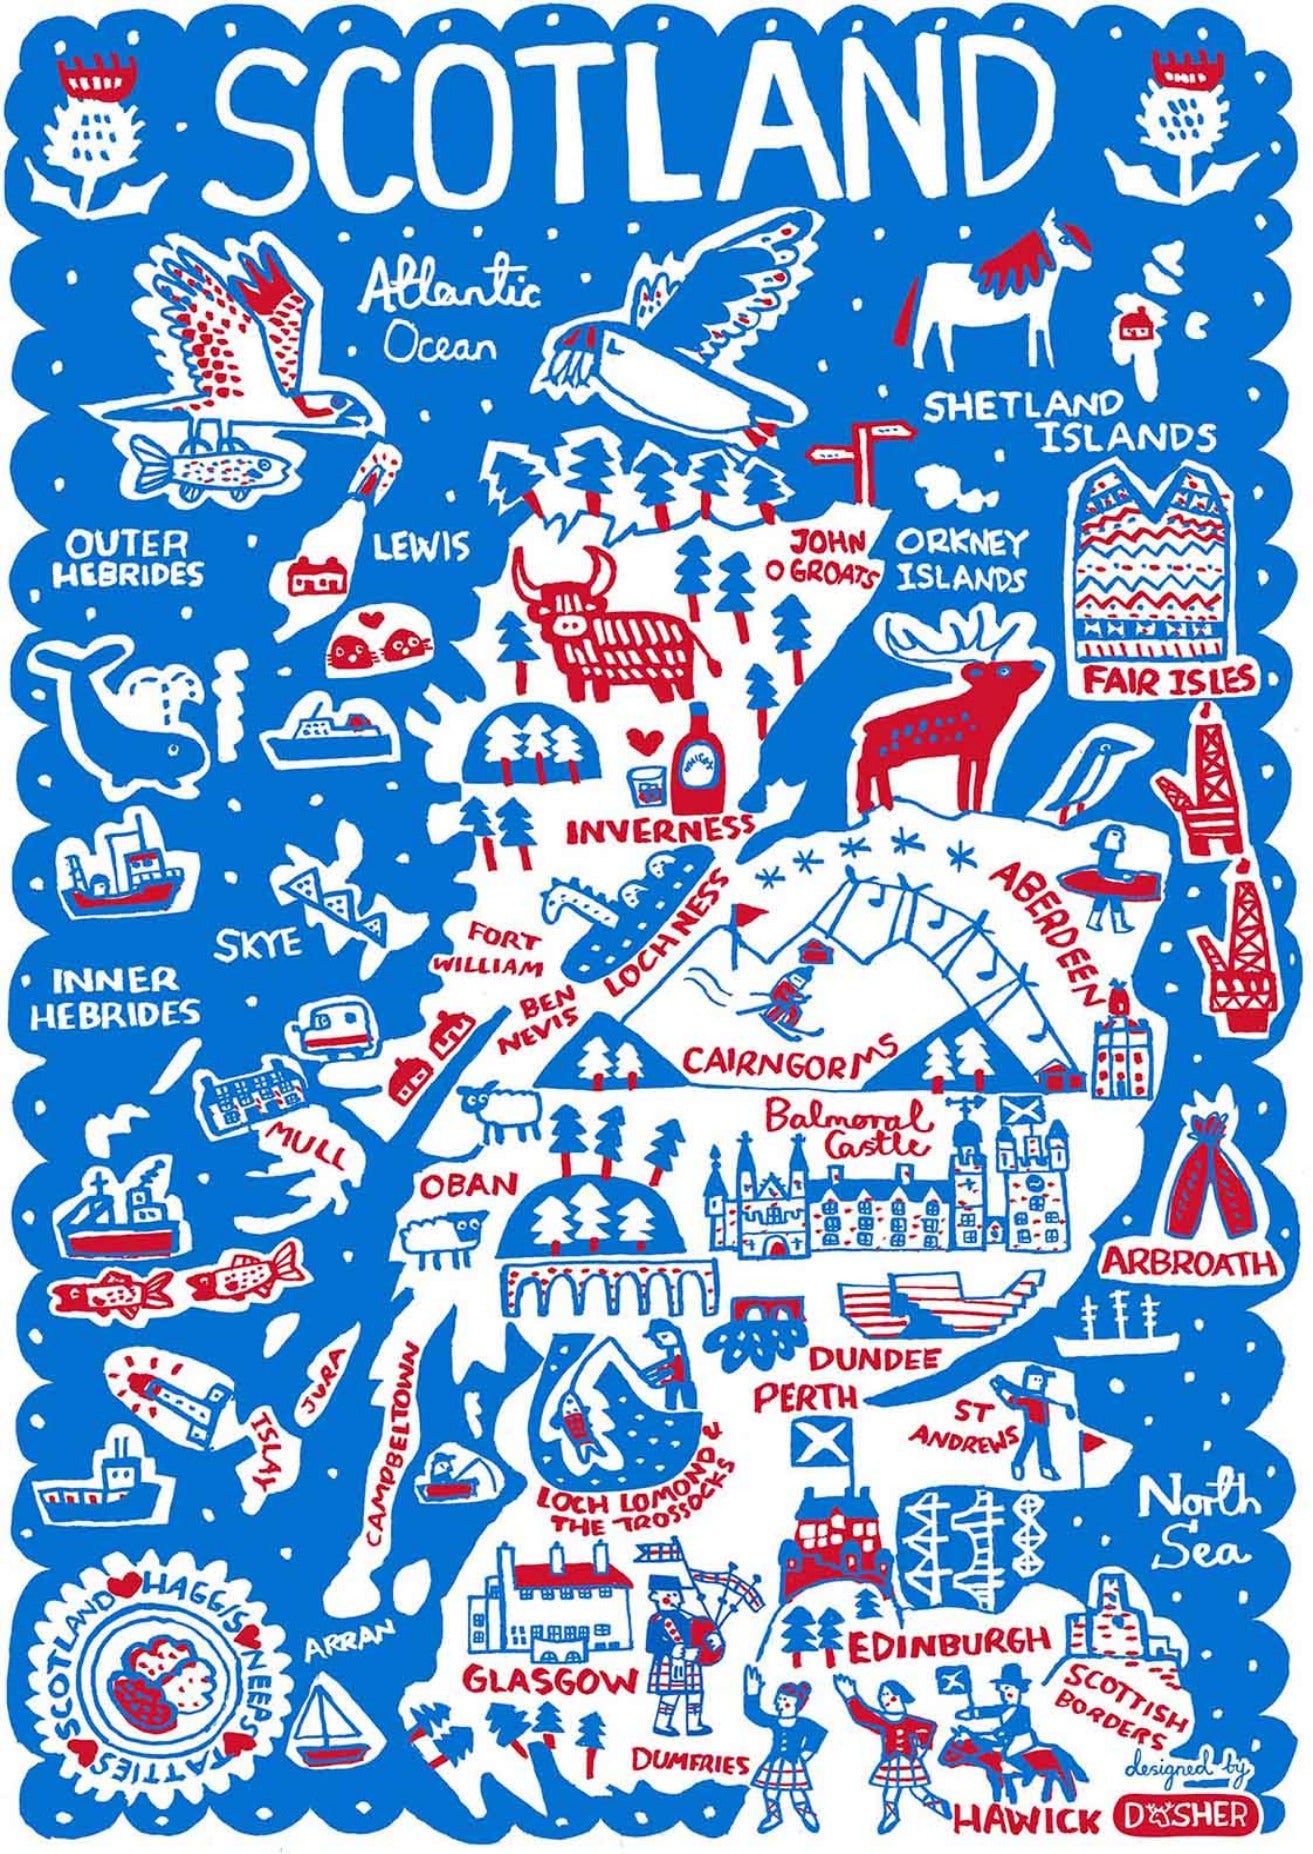 Quirky Scotland Travel Art Print by British map illustrator Julia Gash